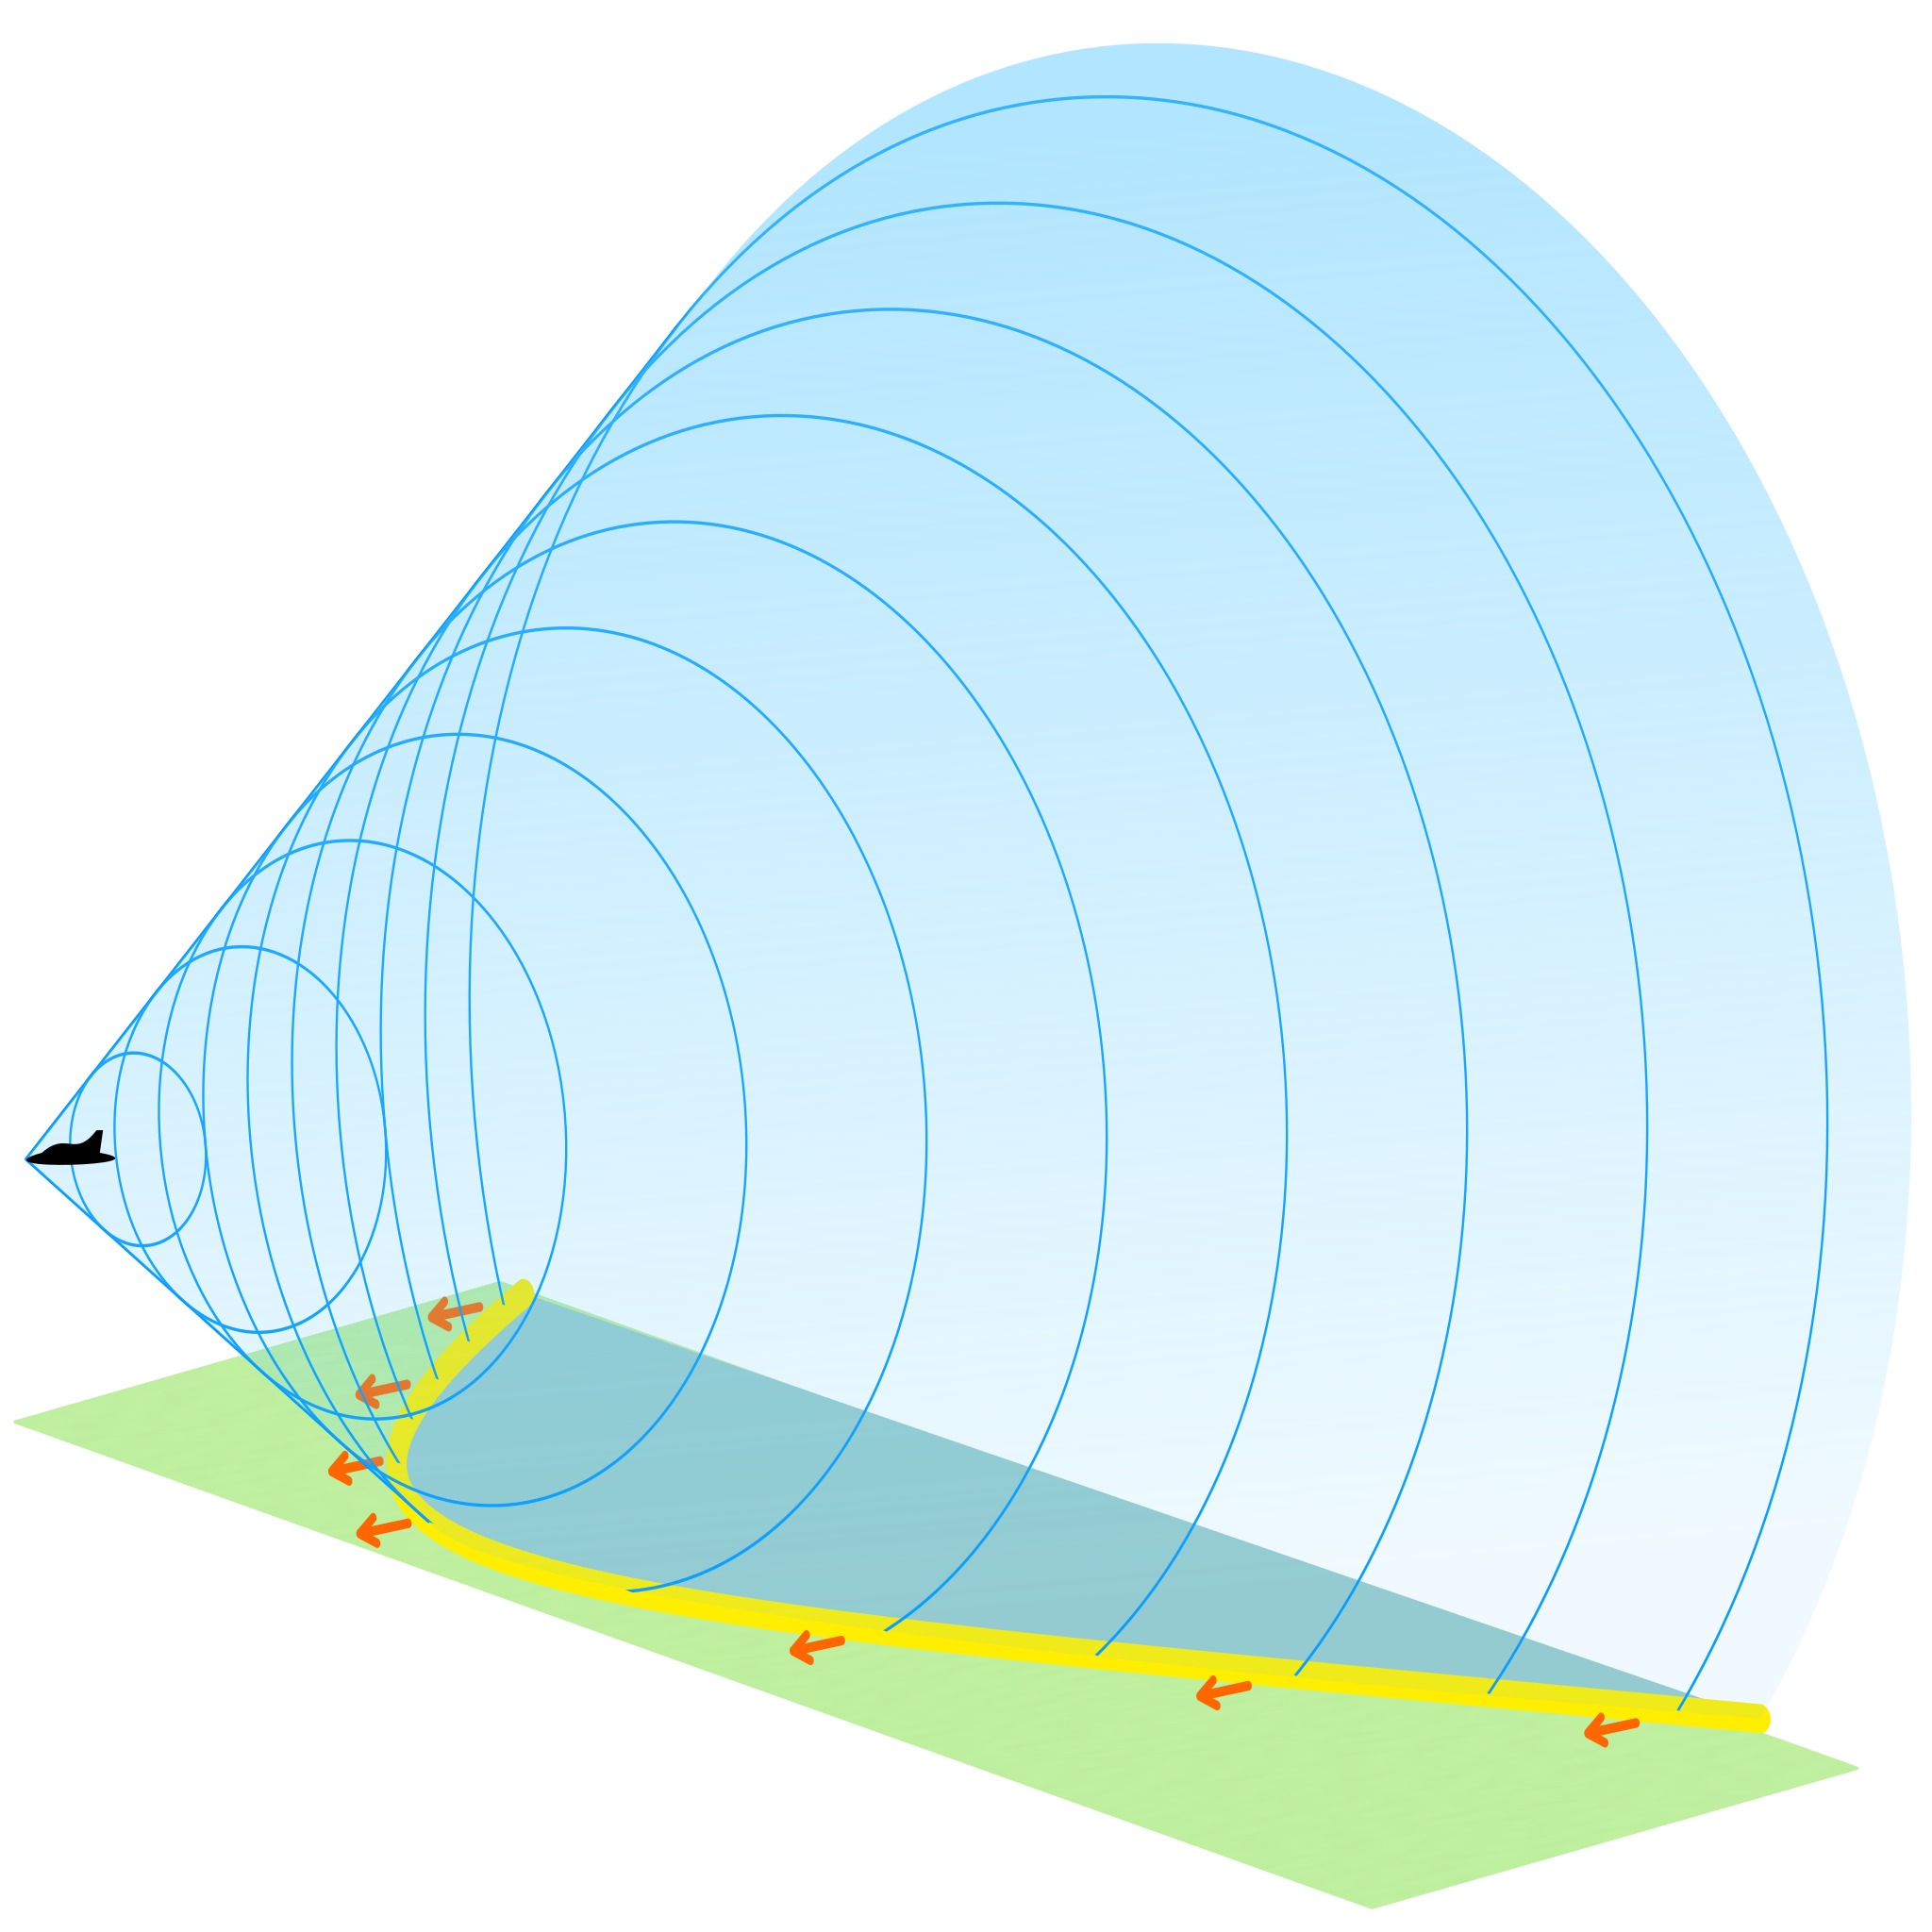 Illustration of the conical shockwave